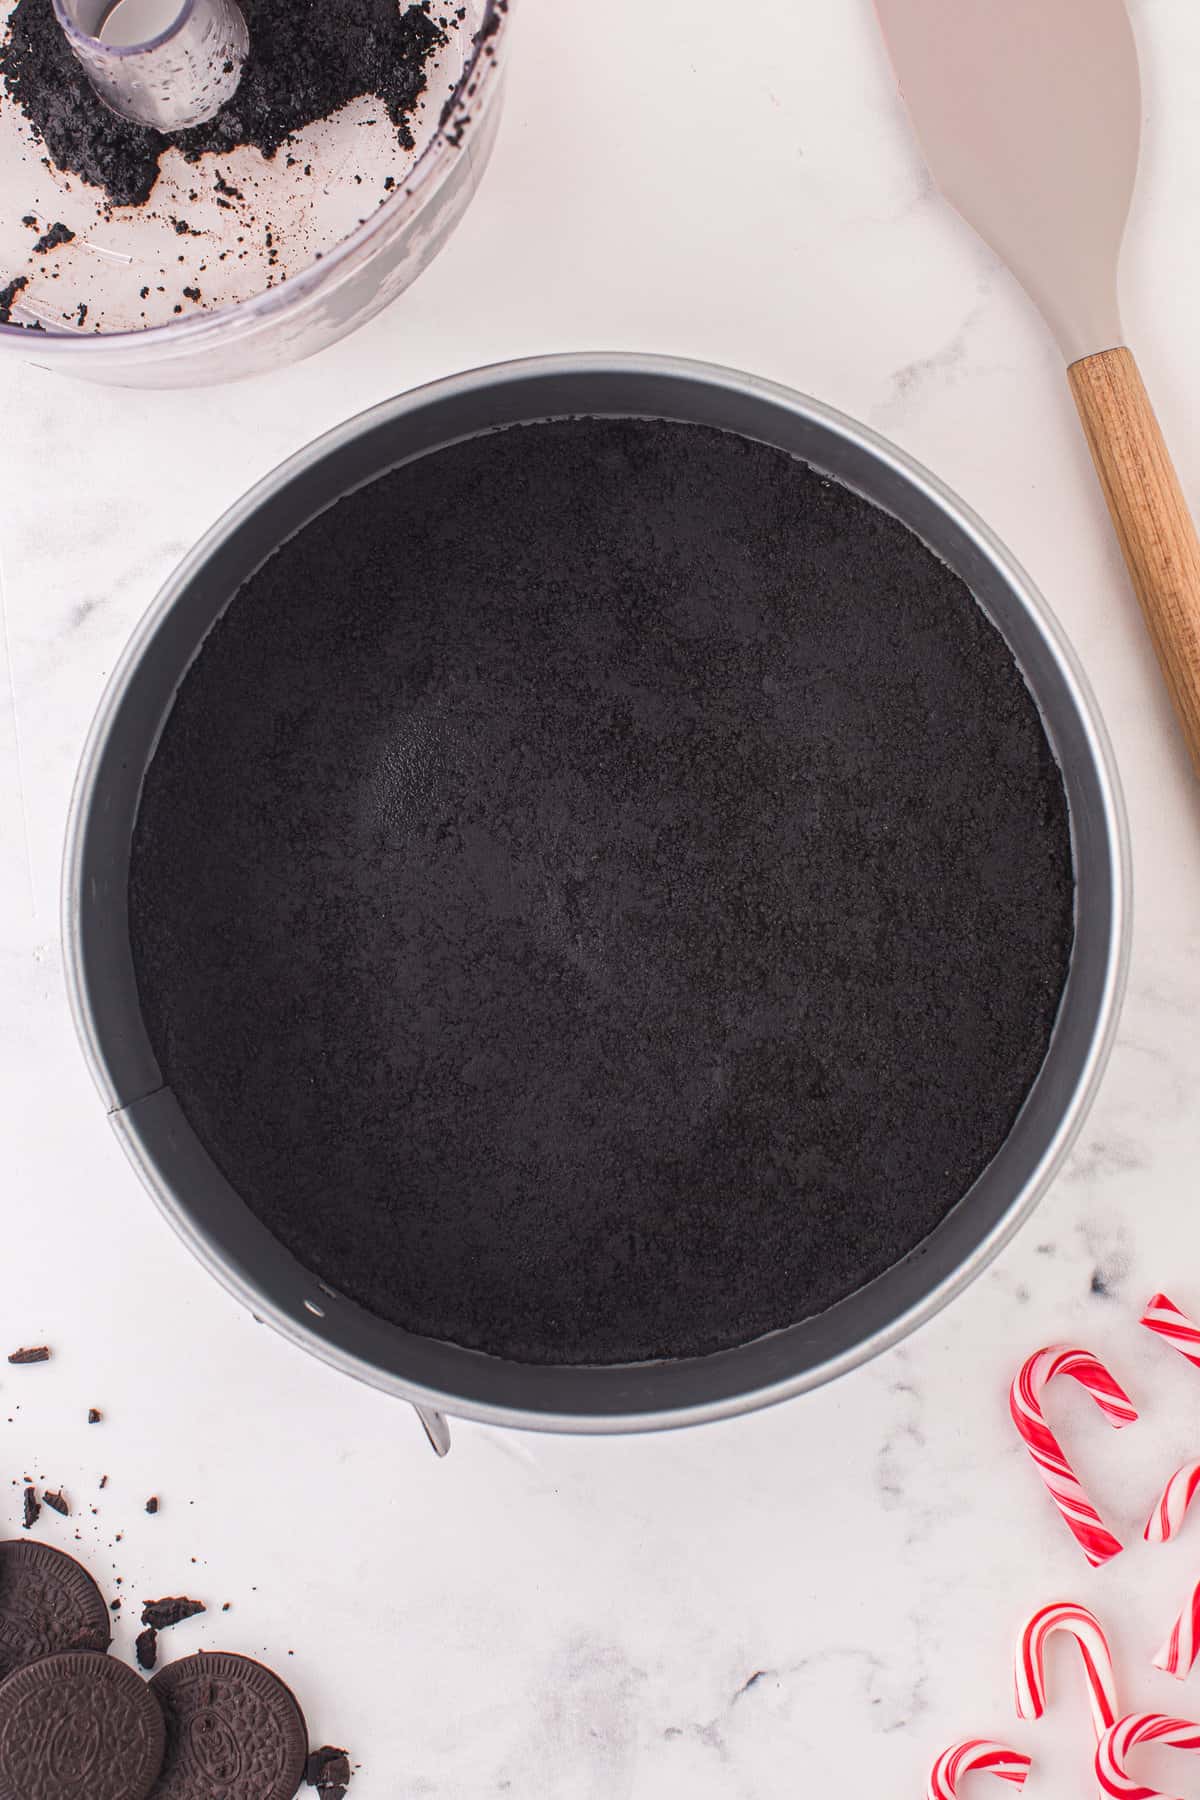 Oreo crust in springform pan